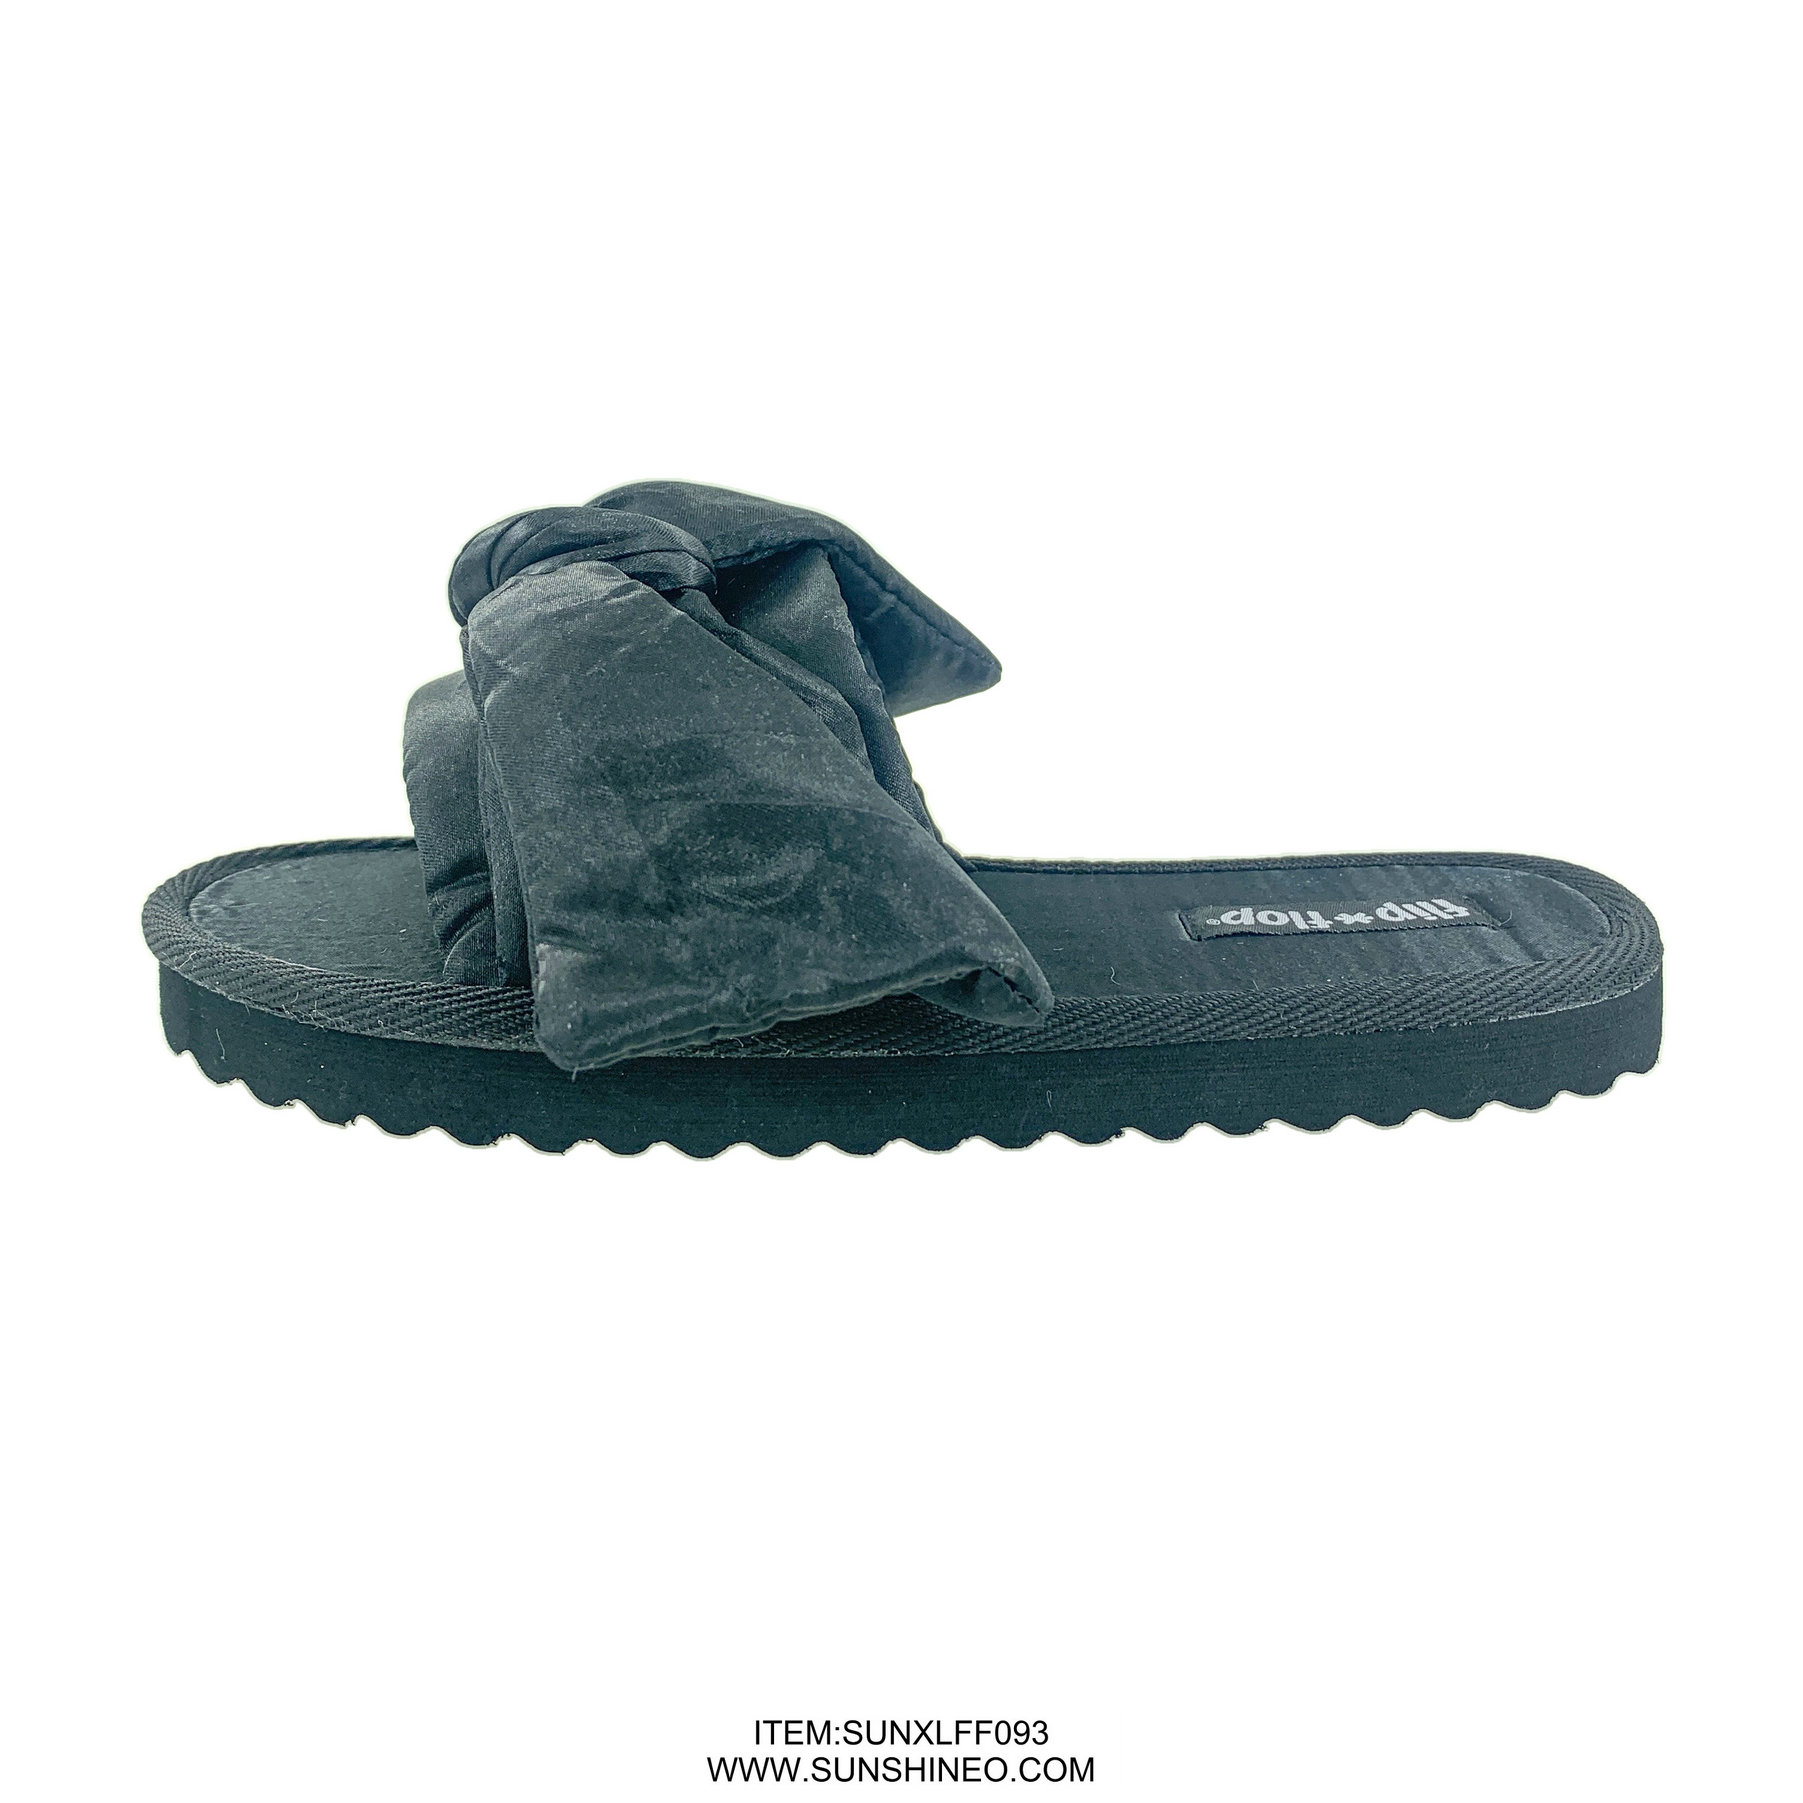 SUNXLFF093 fur flip flop sandals winter slippers